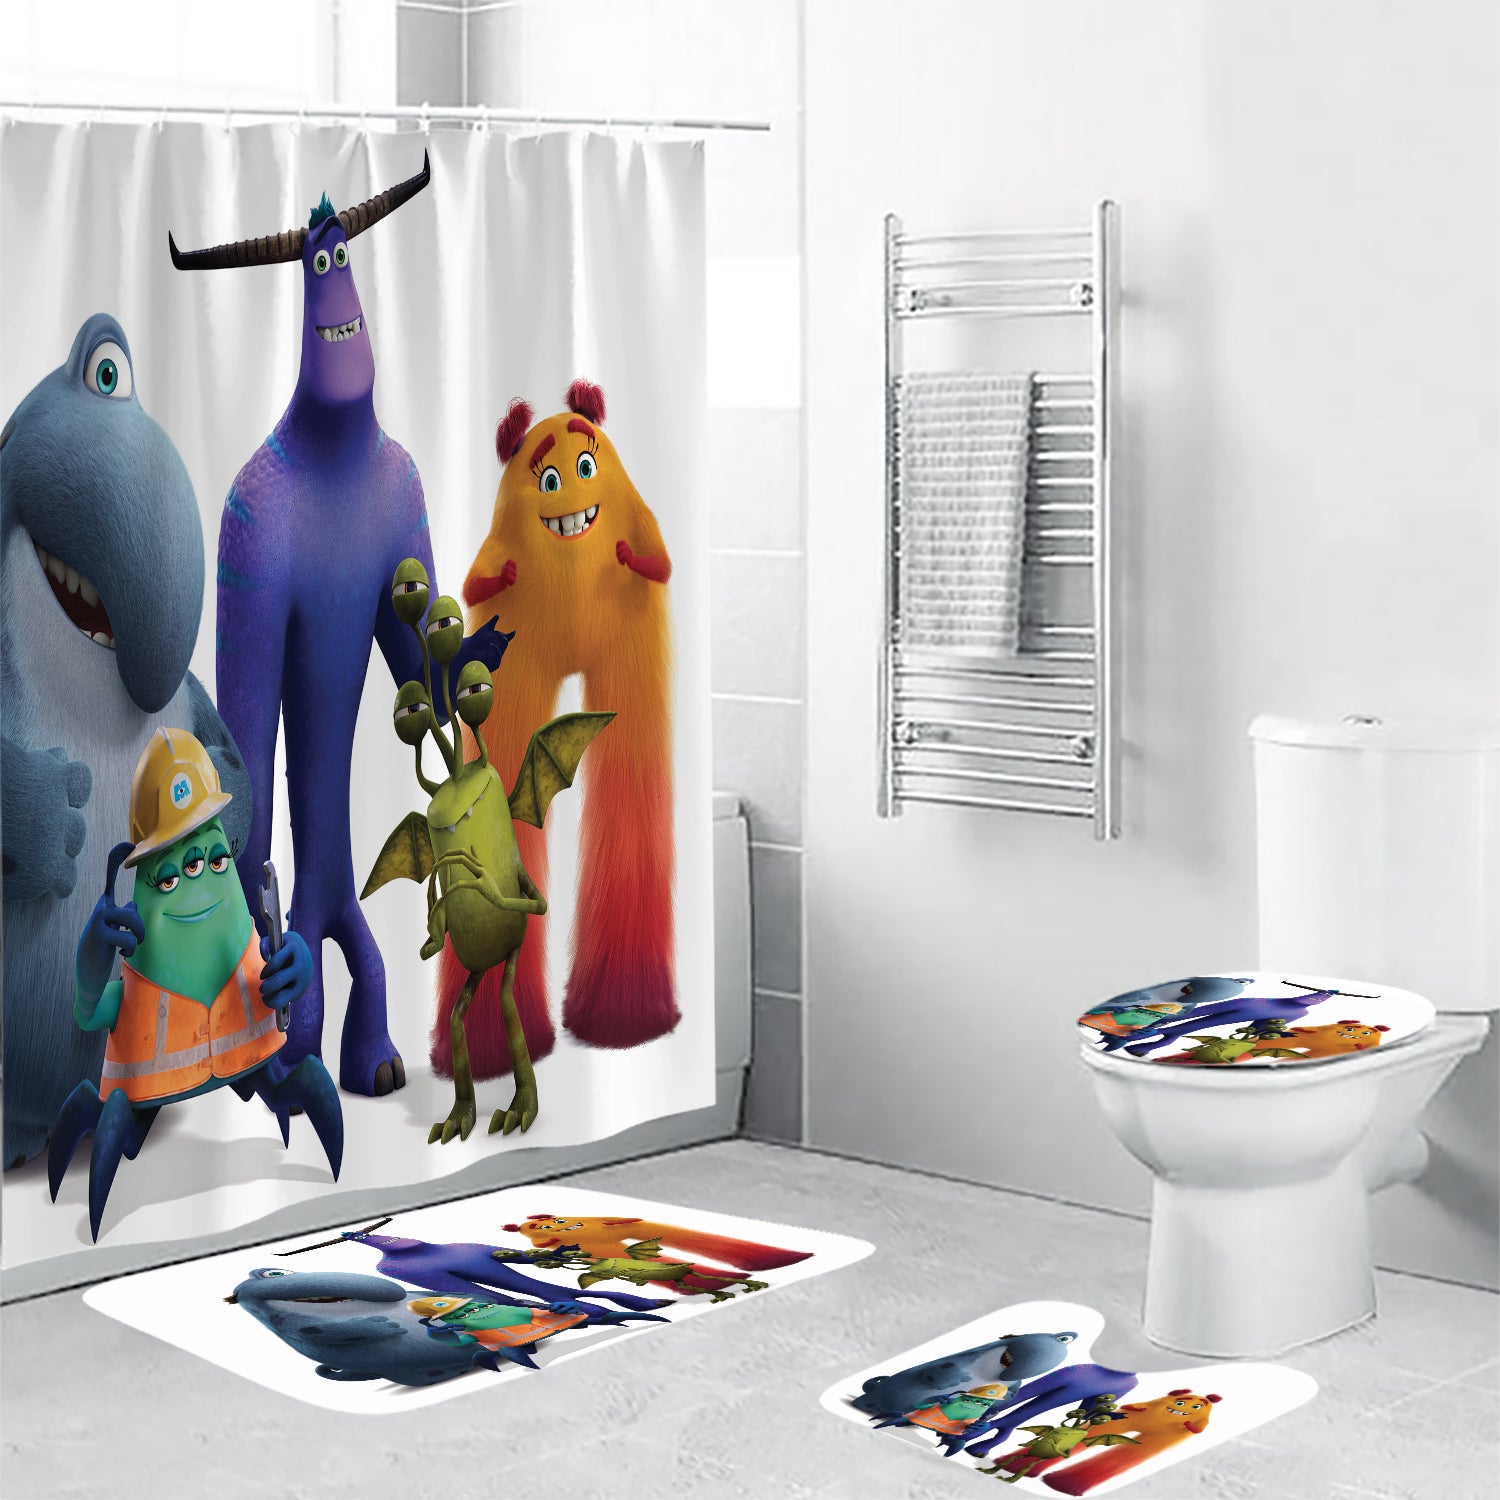 Characters Monster At Work v2 Monsters Inc Monsters University Movie Disney Pixar Waterproof Shower Curtain Non-Slip Toilet Lid Cover Bath Mat - Bathroom Set